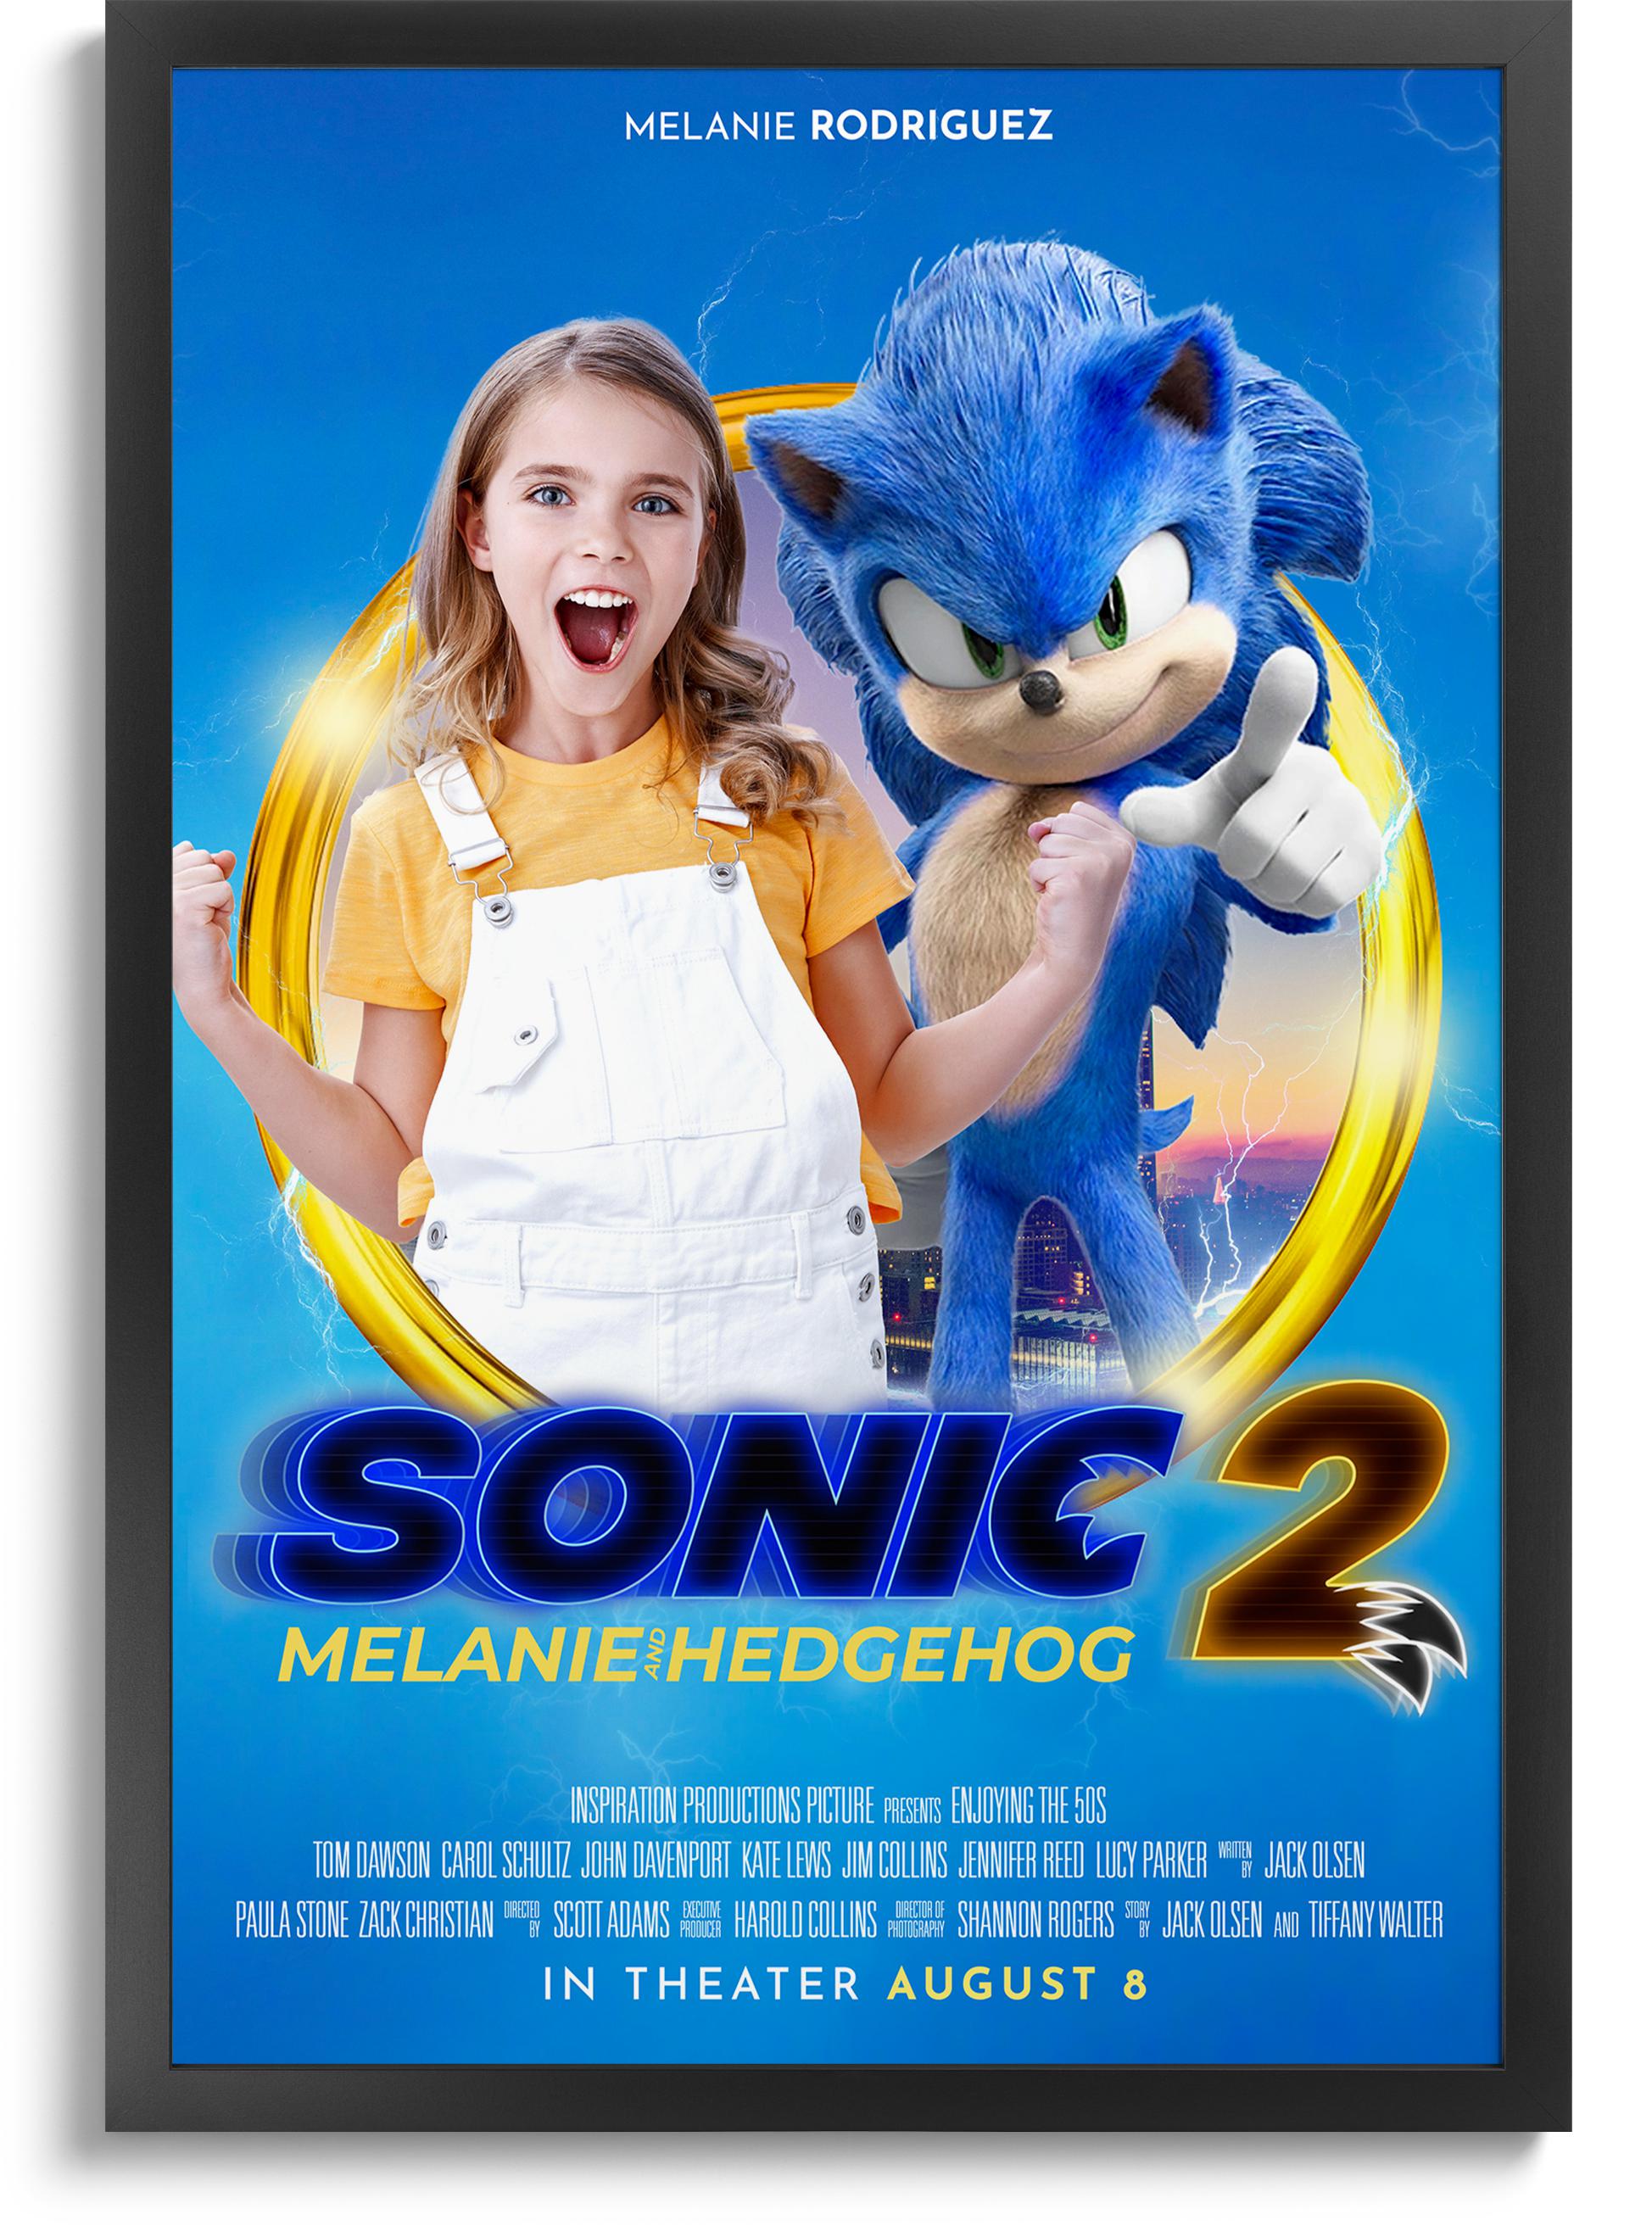 Sonic the Hedgehog (2020) Brazilian movie poster